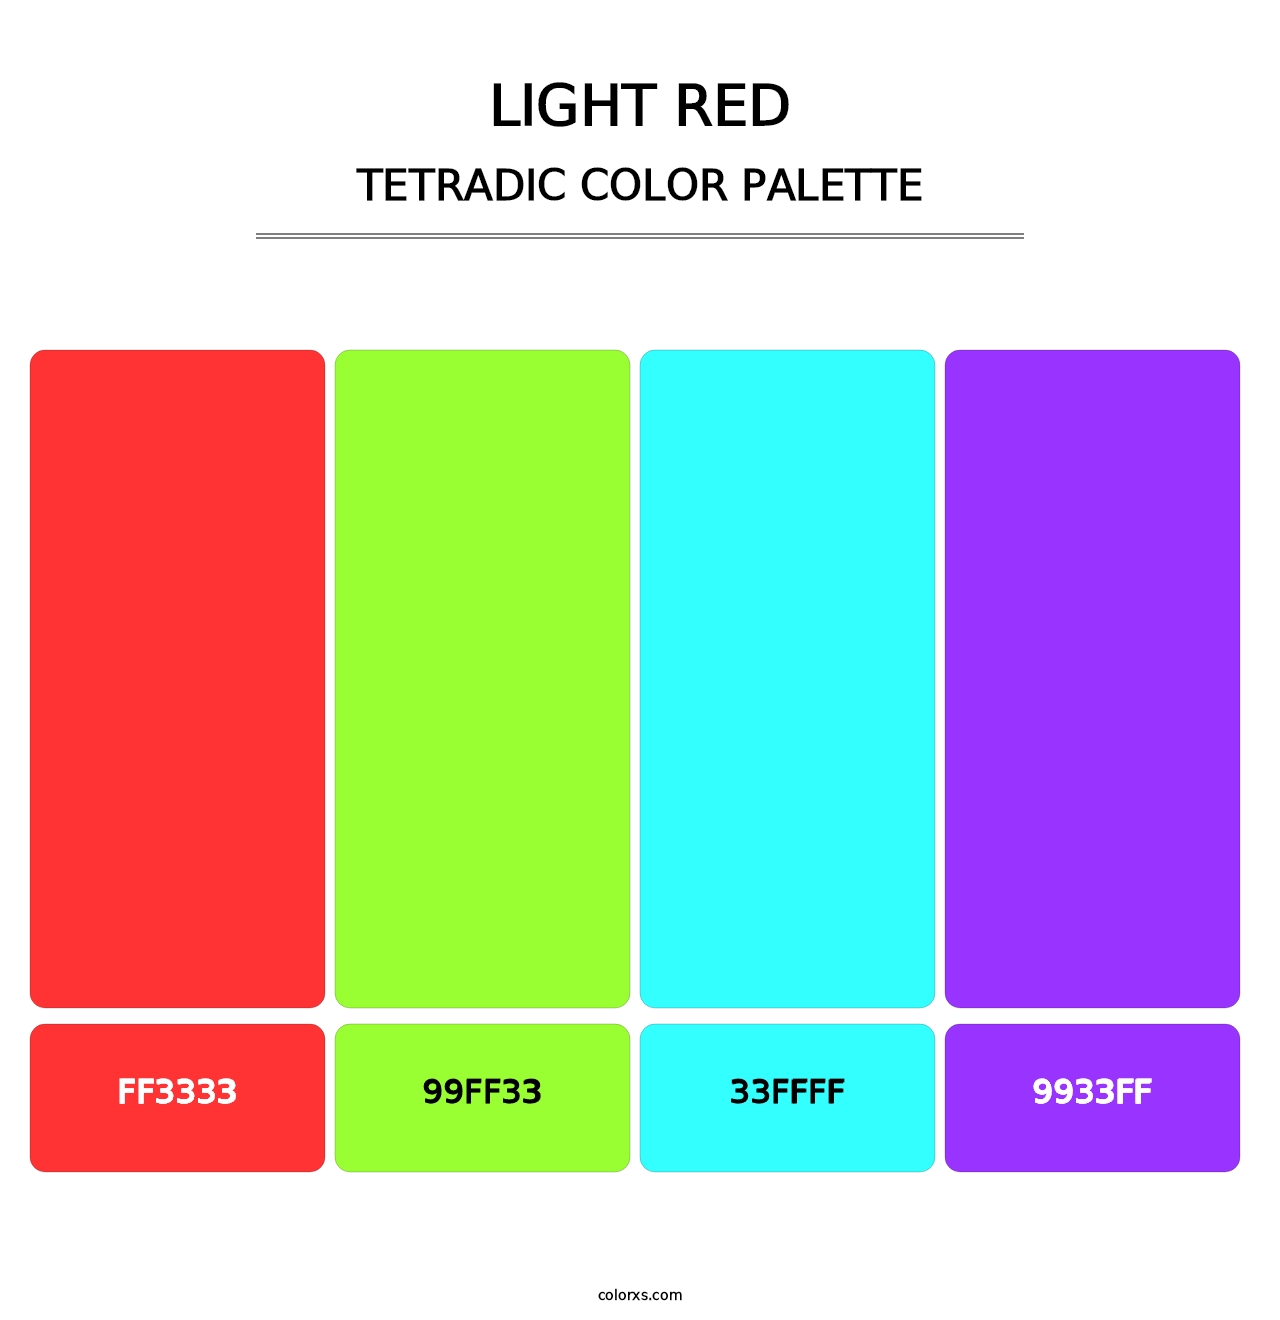 Light Red - Tetradic Color Palette